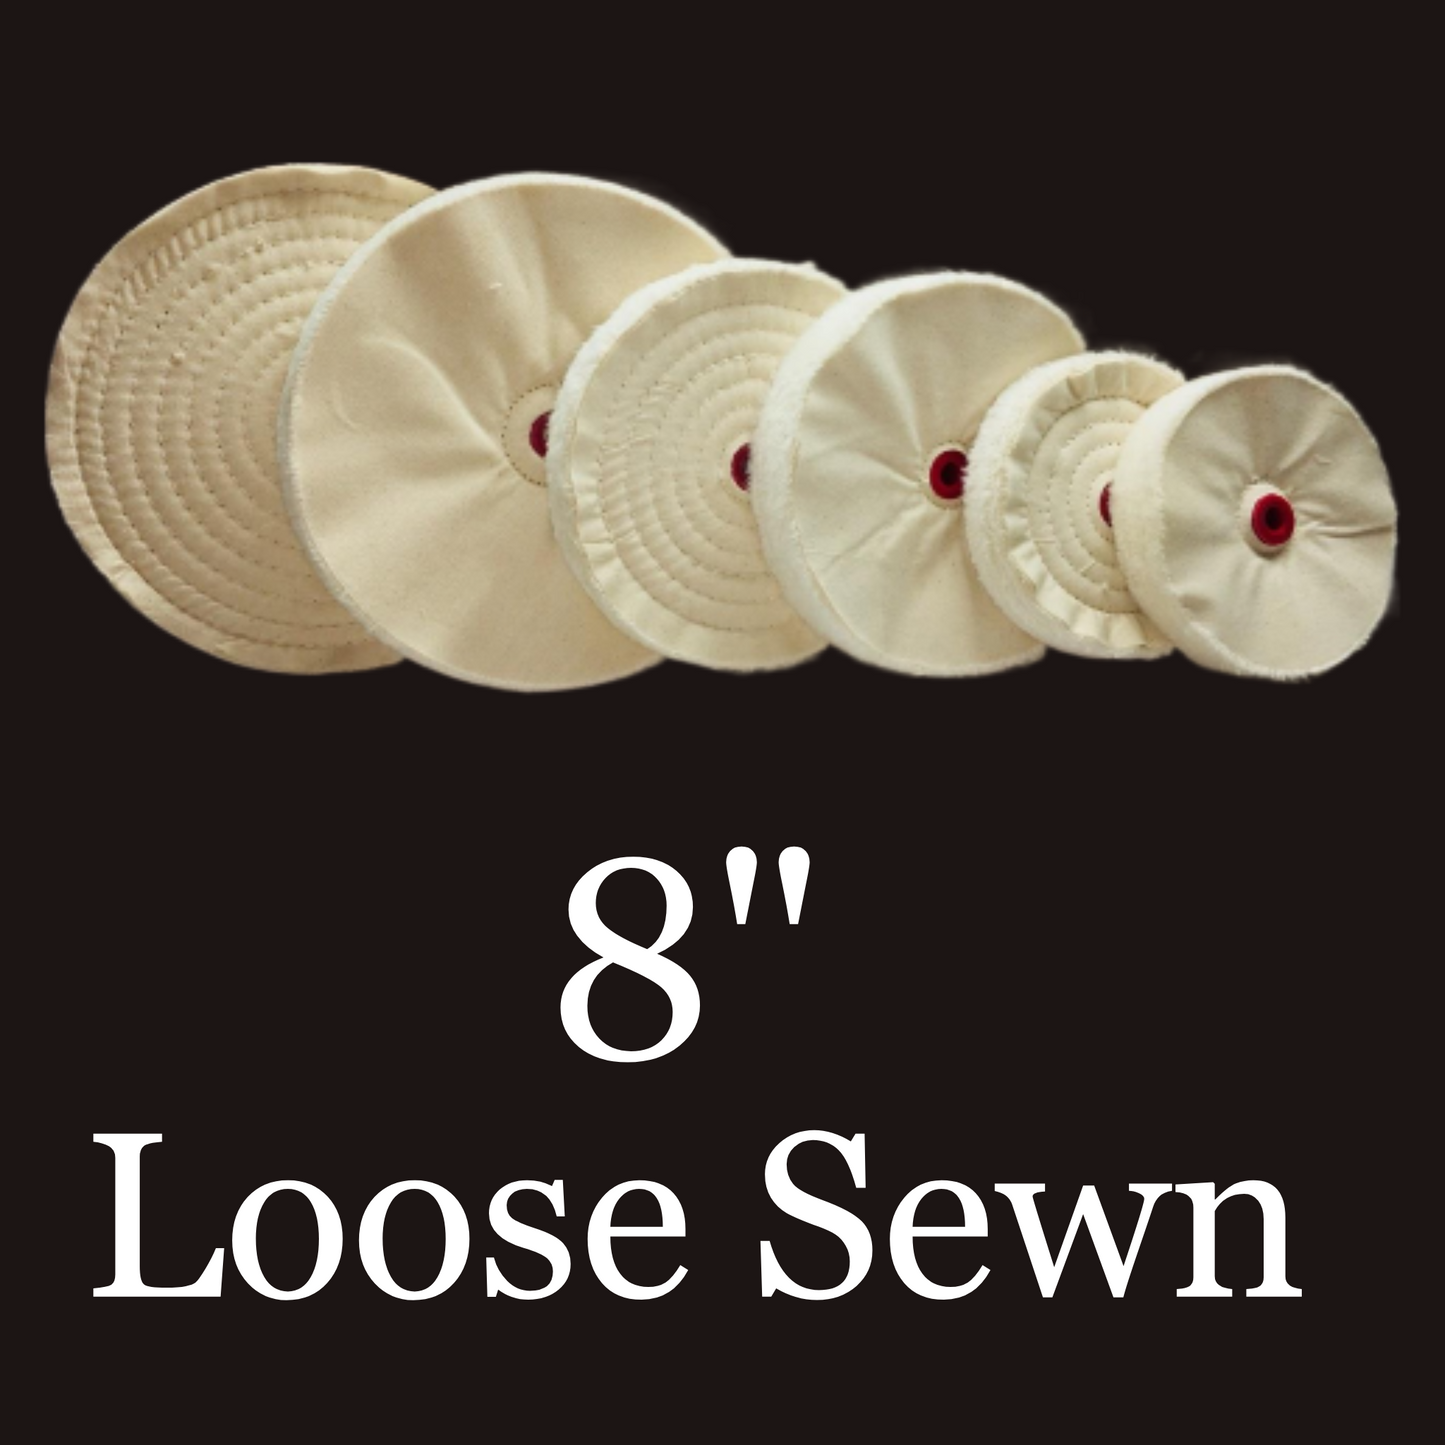 Loose Sewn Cotton Buffing 8” Wheels